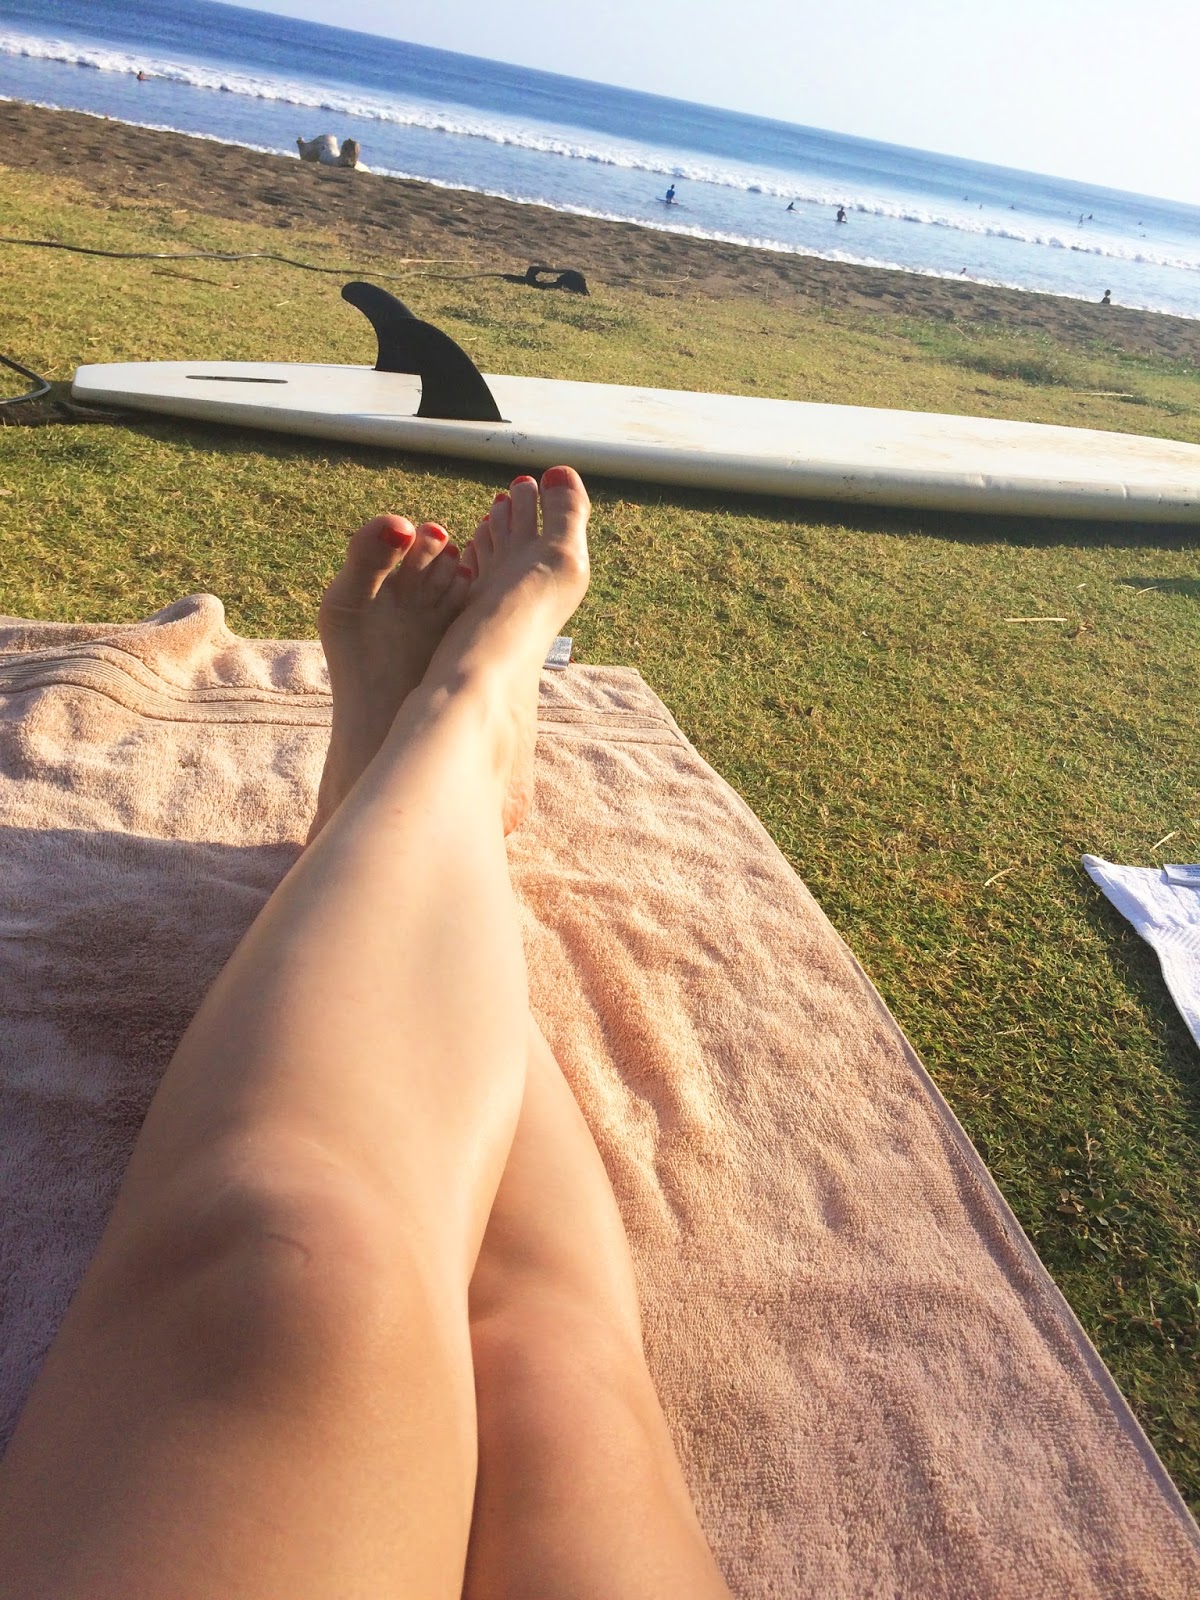 Relaxing at Playa Venao